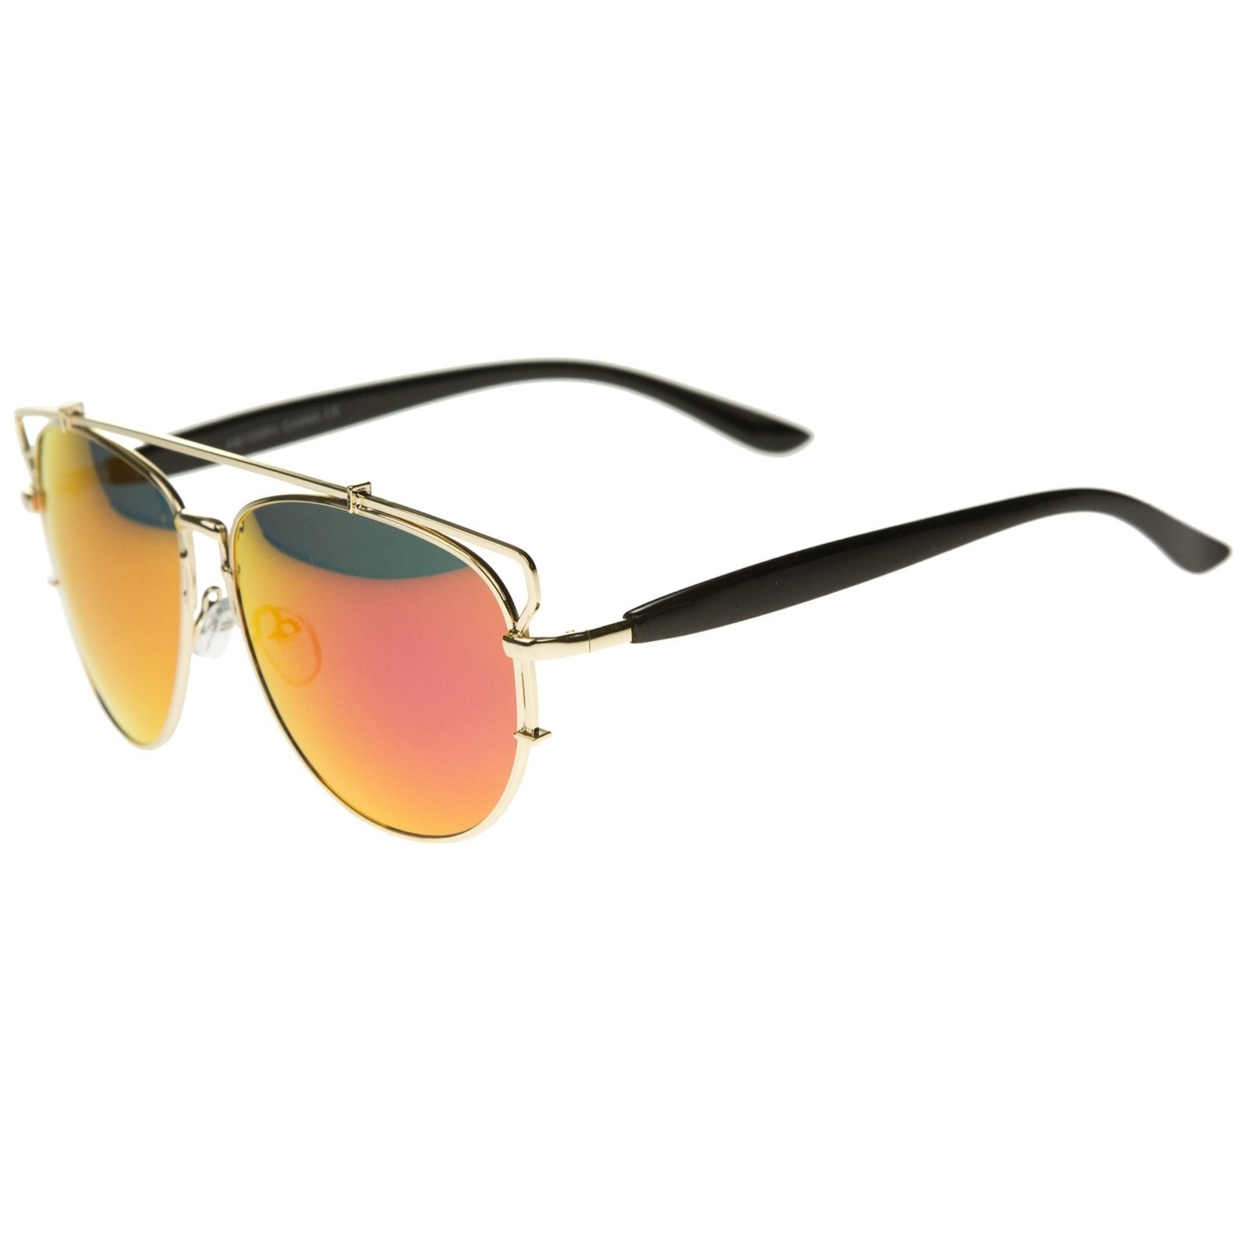 Modern Full Metal Crossbar Open Design Colored Mirror Aviator Sunglasses 58mm - Silver / Blue Mirror